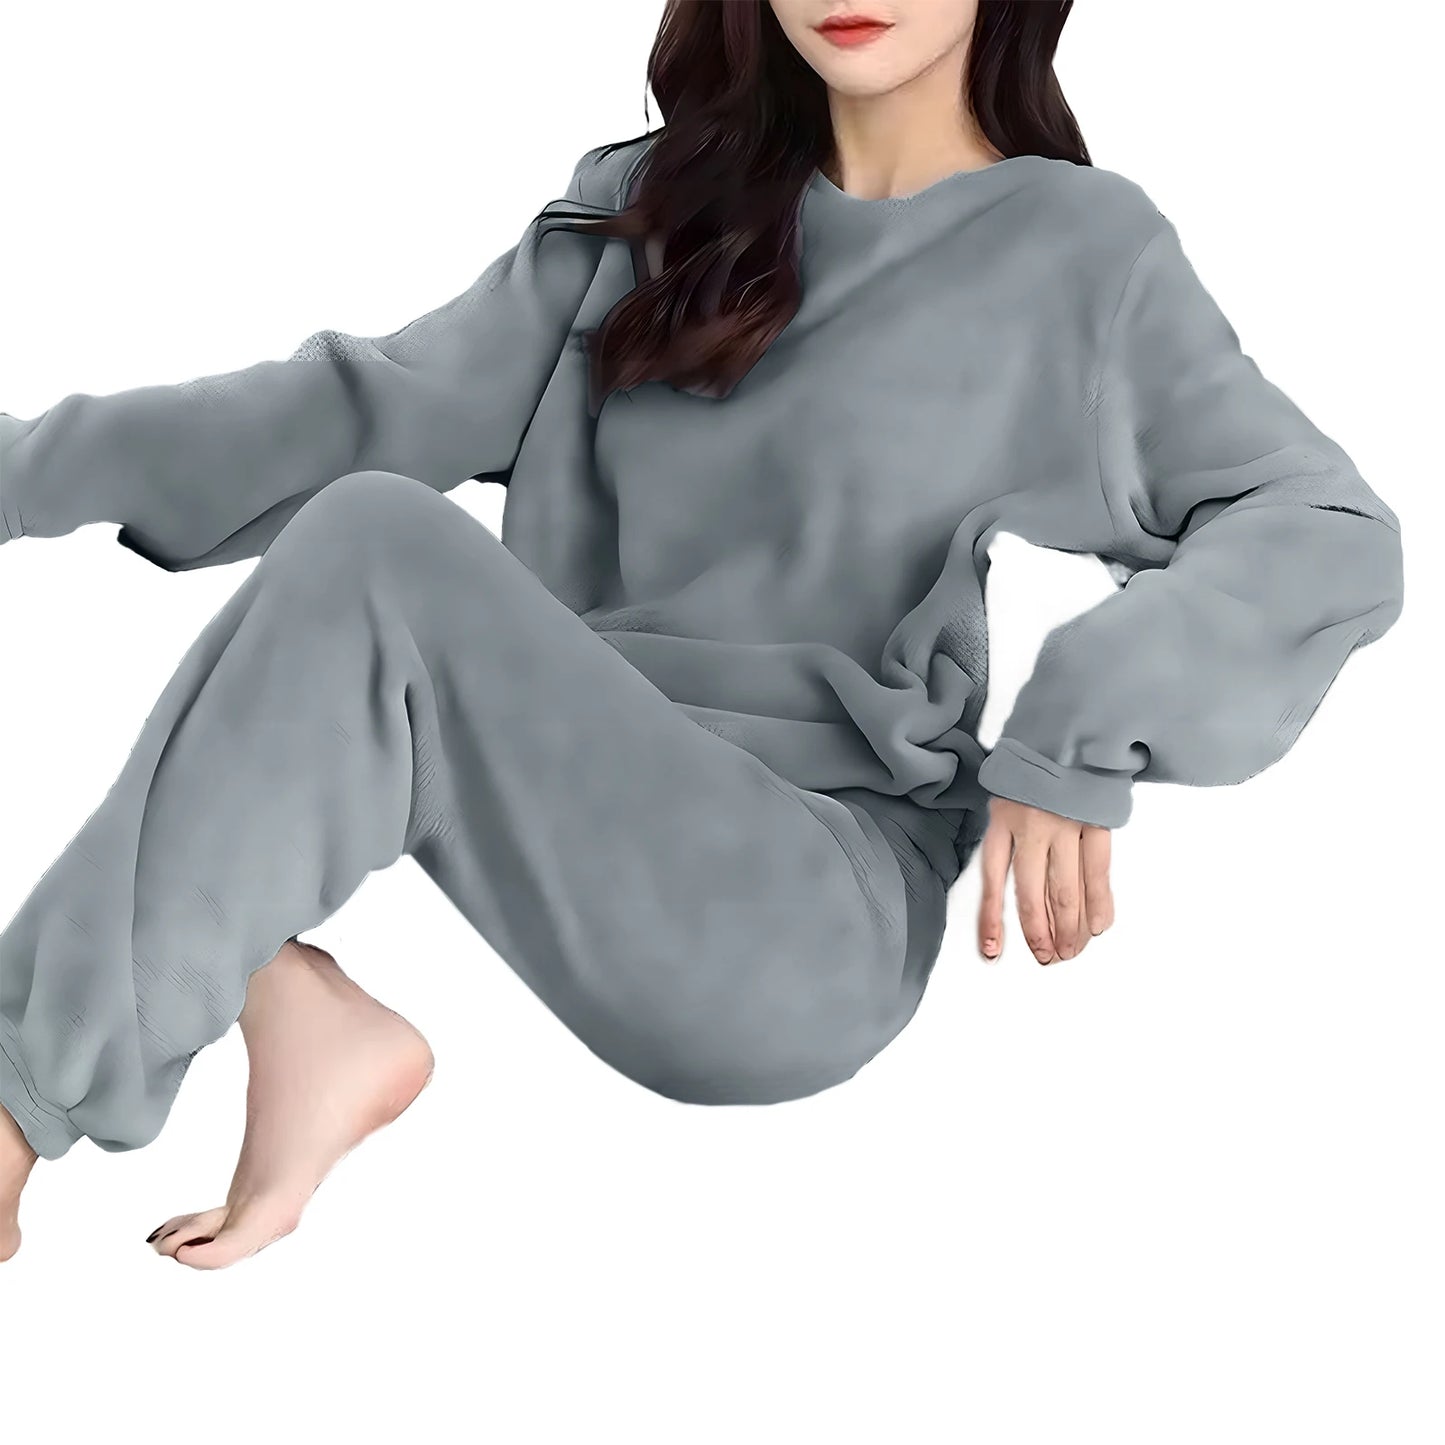 Pyjamas Sets - Warm Thick/Velvety, Flannel, Long Sleeve, Cartoon, Loungewear/Sleepwear - Grey Blue